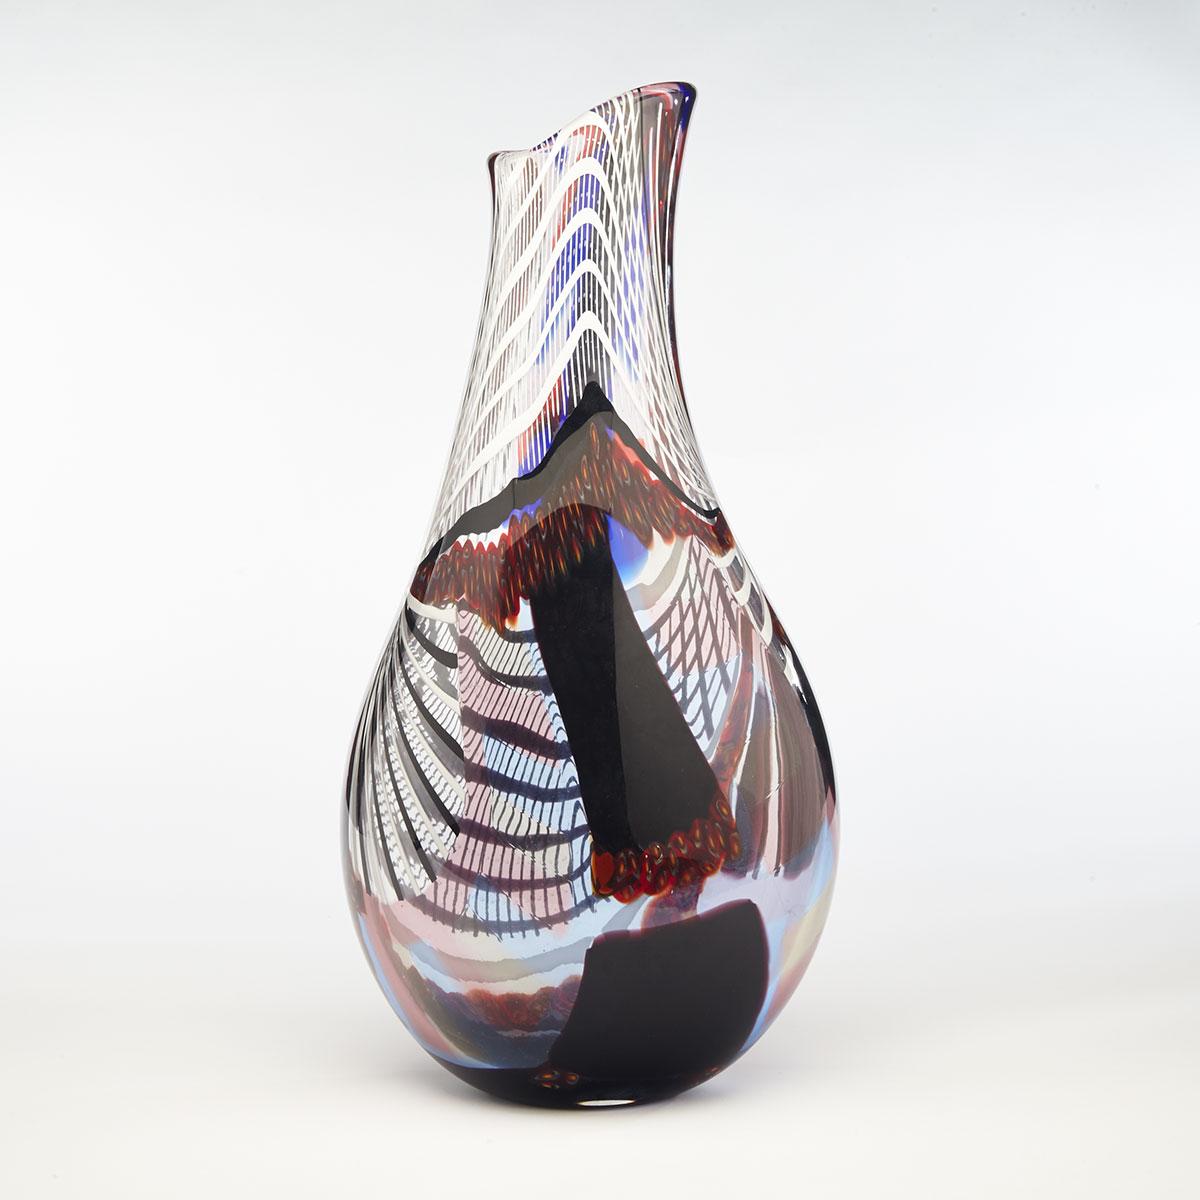 Afro Celotto (Italian, b.1963) Glass Vase, c.2003